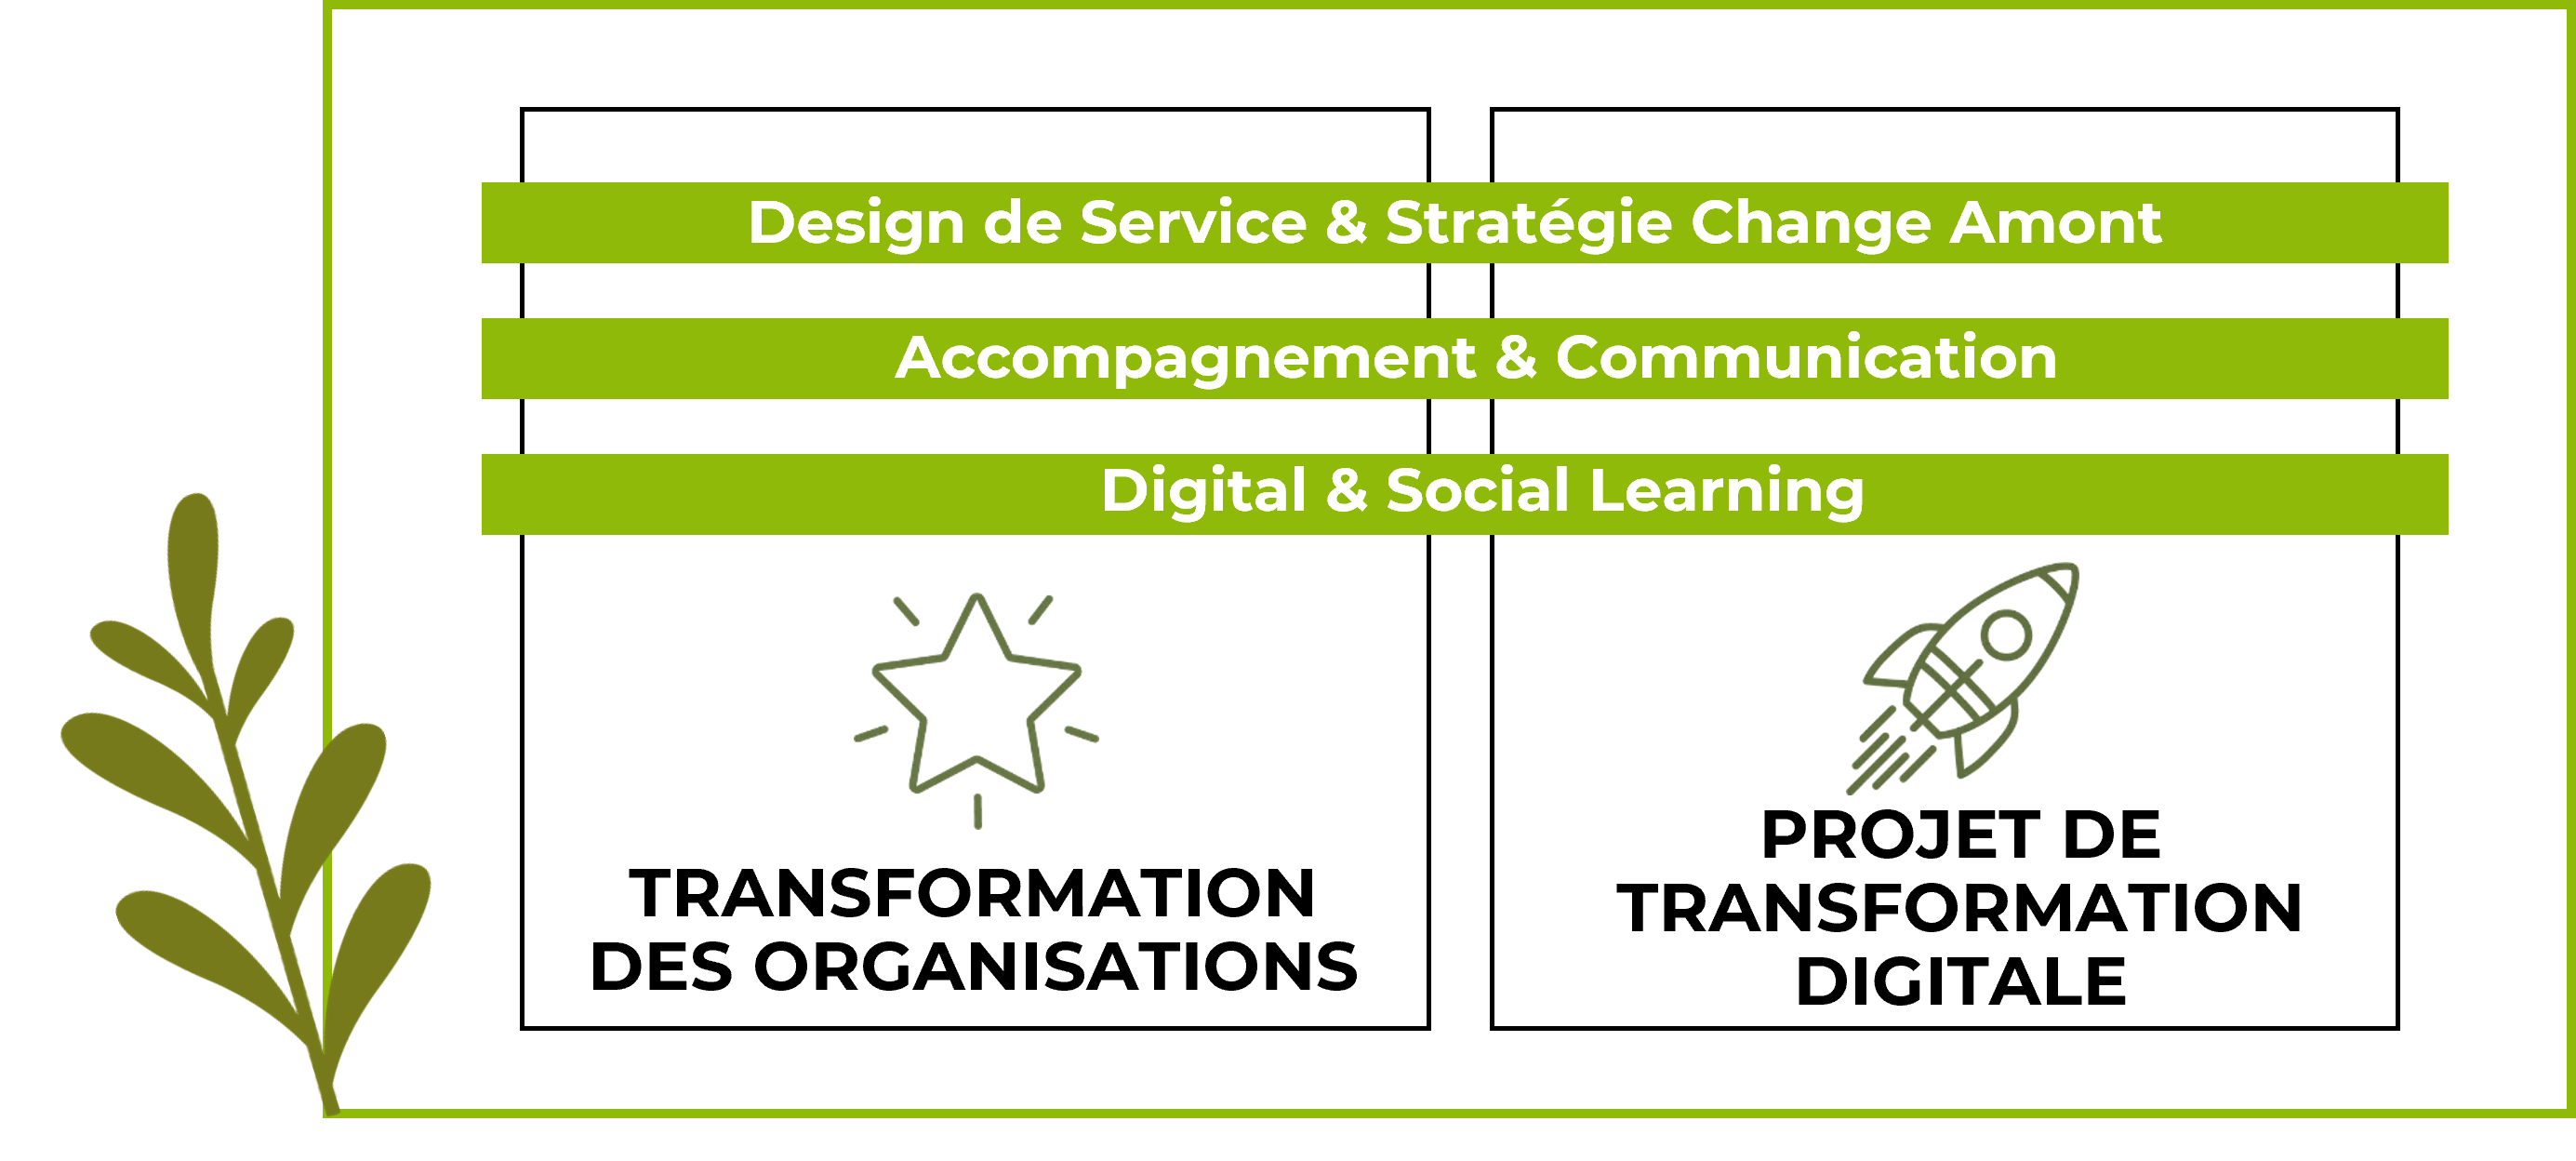 Transformation des organisation, projet de transformation digitale